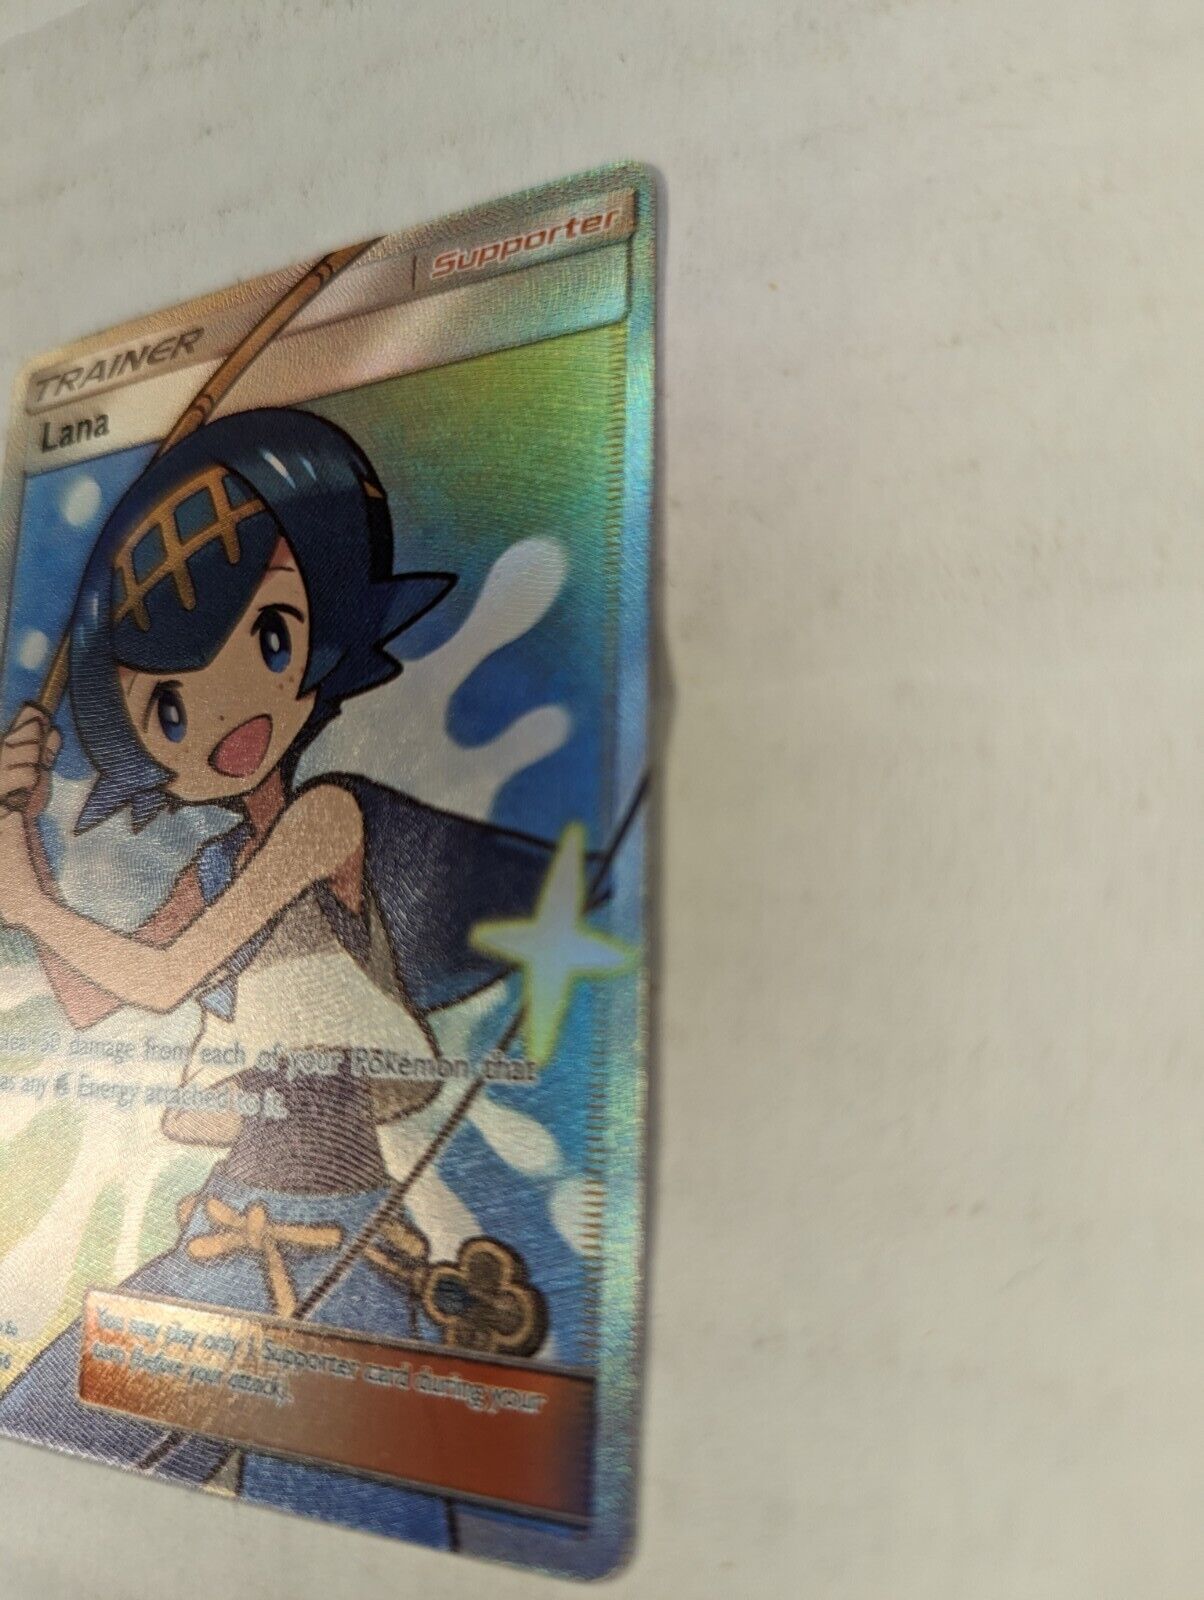 Pokemon TCG Lana 150/156 Full Art Card Sun & Moon Ultra Prism Near Mint